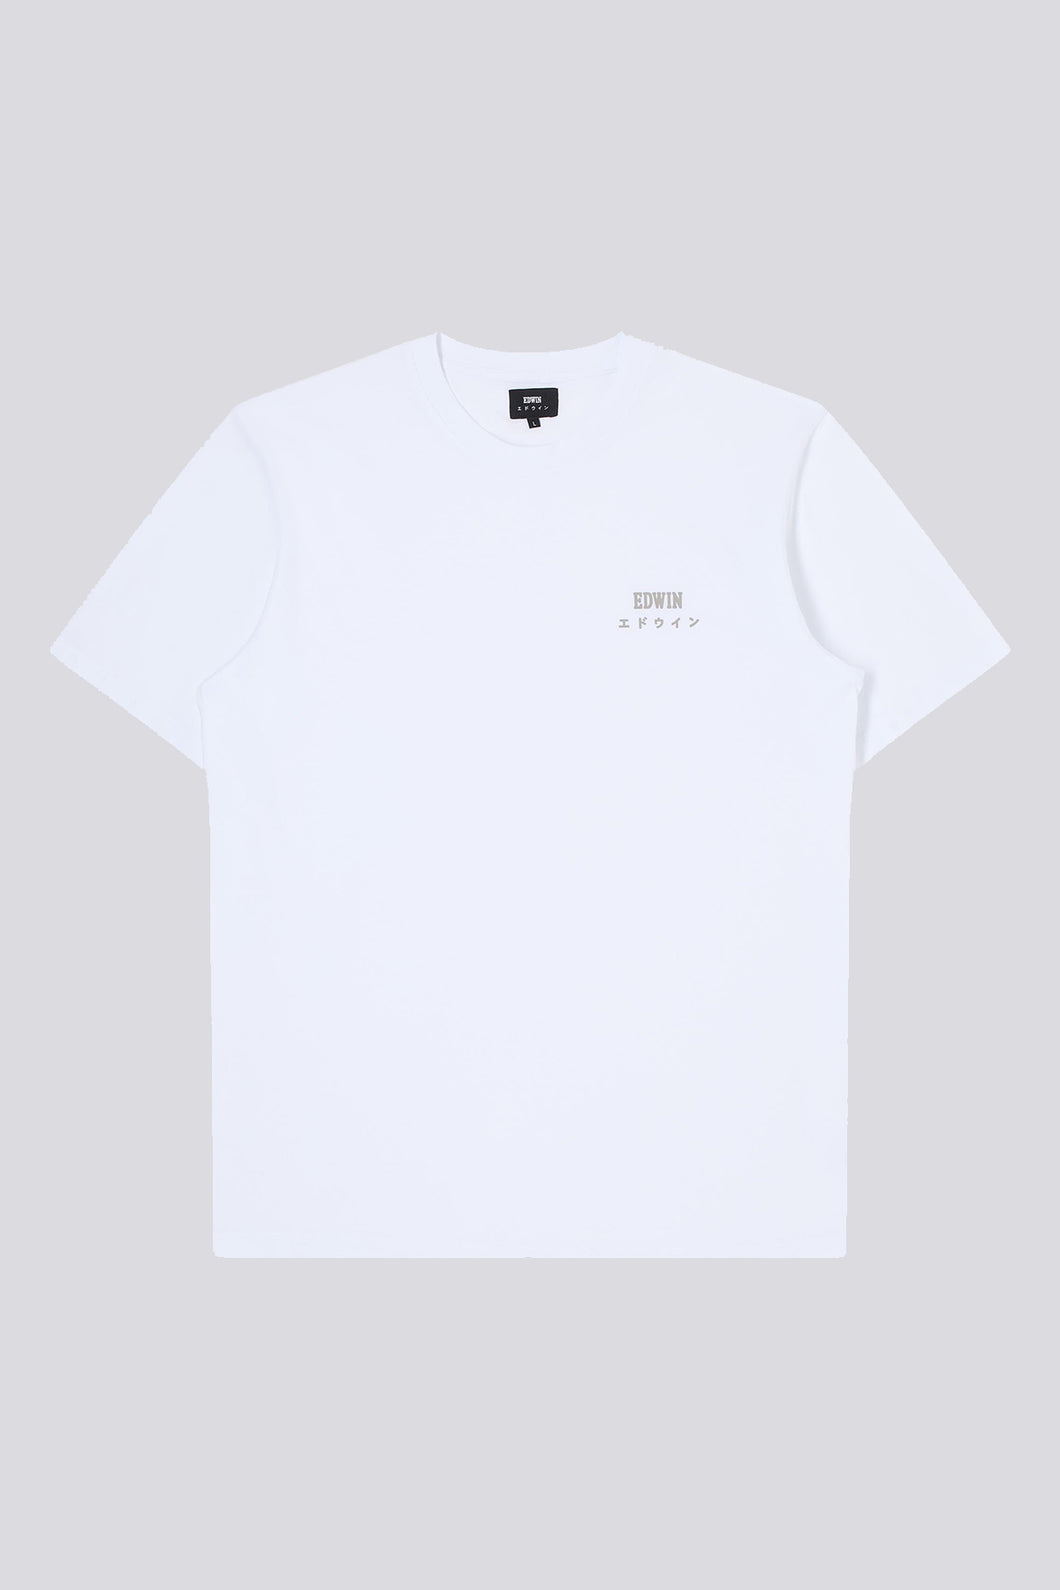 Edwin Logo Chest T-Shirt White